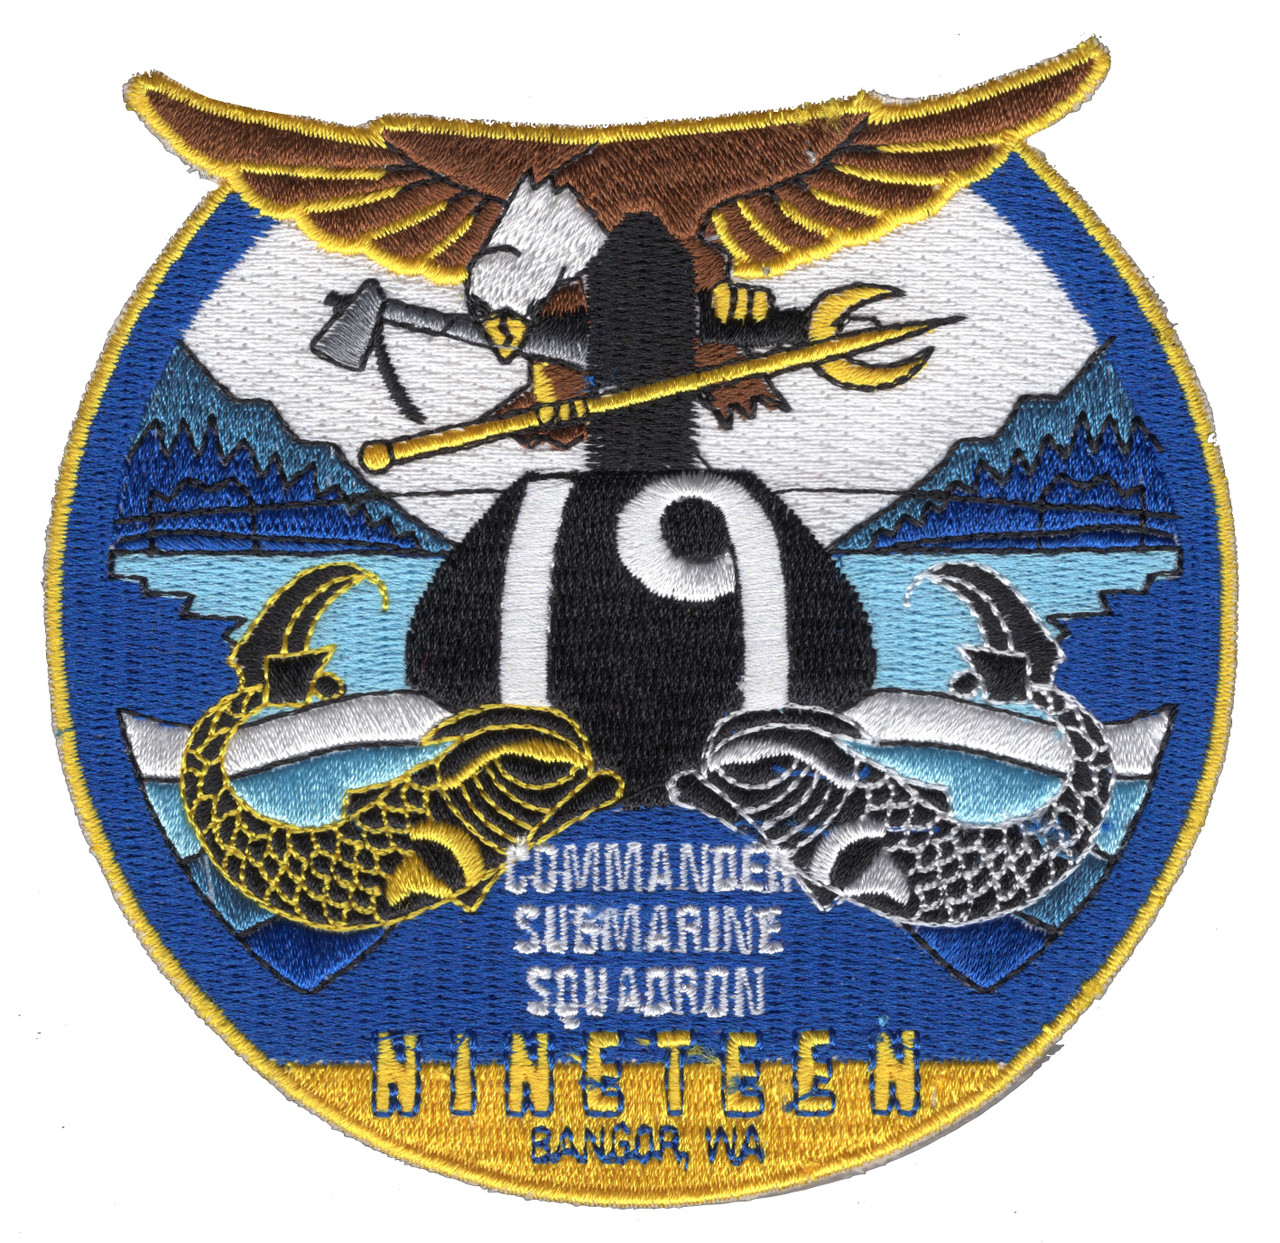 19th Commander Submarine Squadron Patch